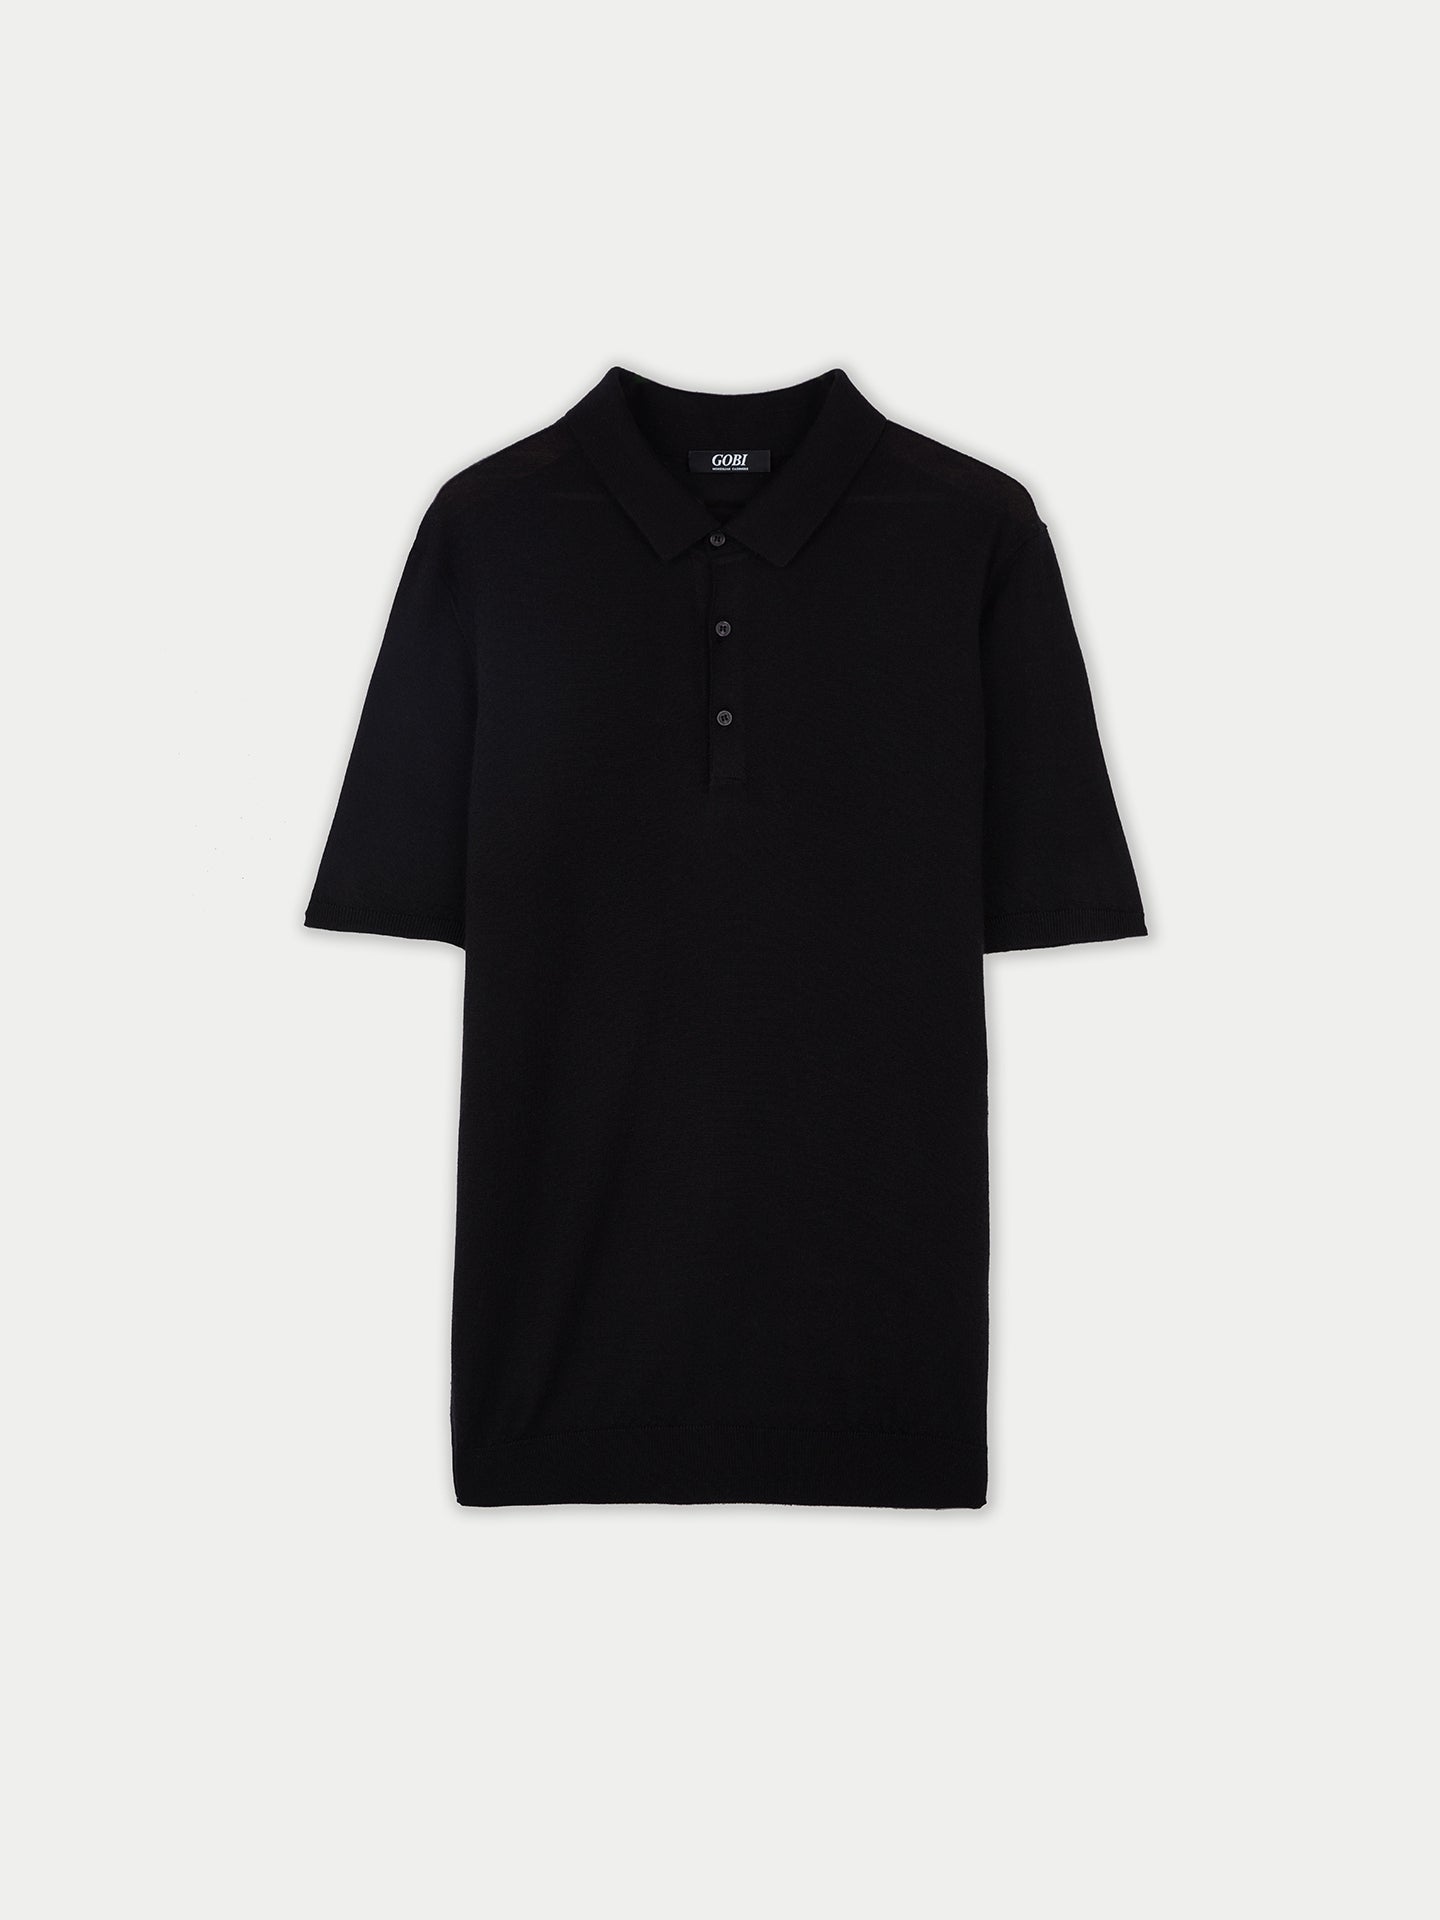 Authentic Cashmere Silk Short-Sleeve Polo | GOBI Cashmere